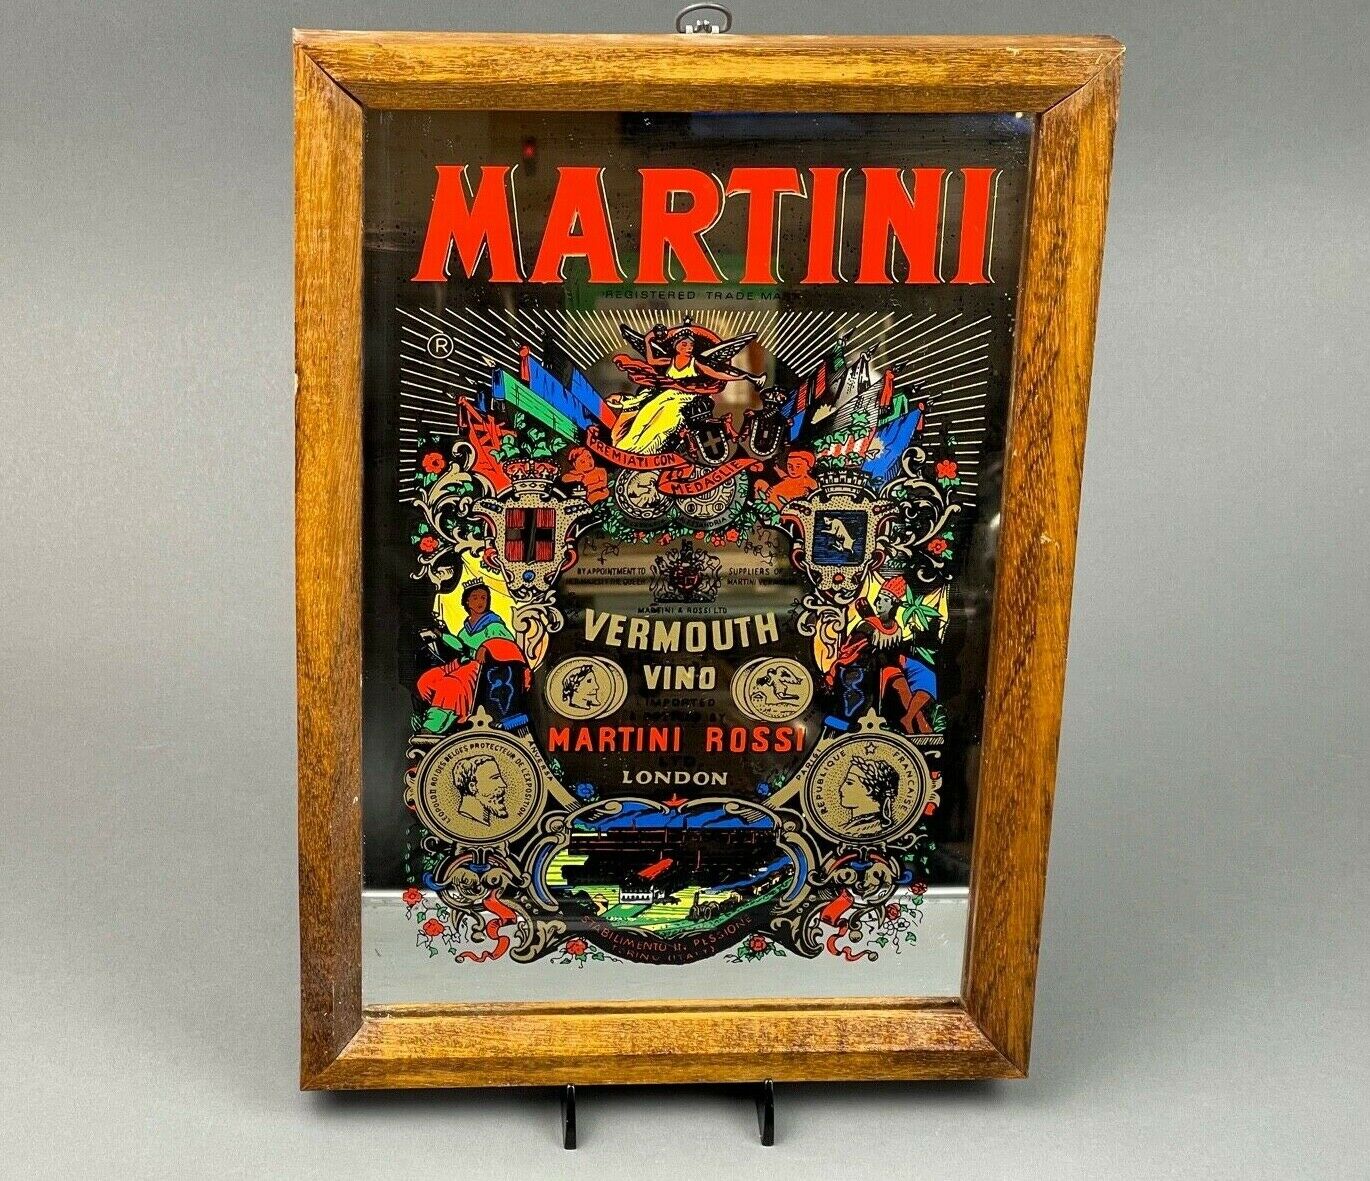 Vintage Martini Vermouth Vino Martini & Rossi Mirror 9x13 Wood Frame, England